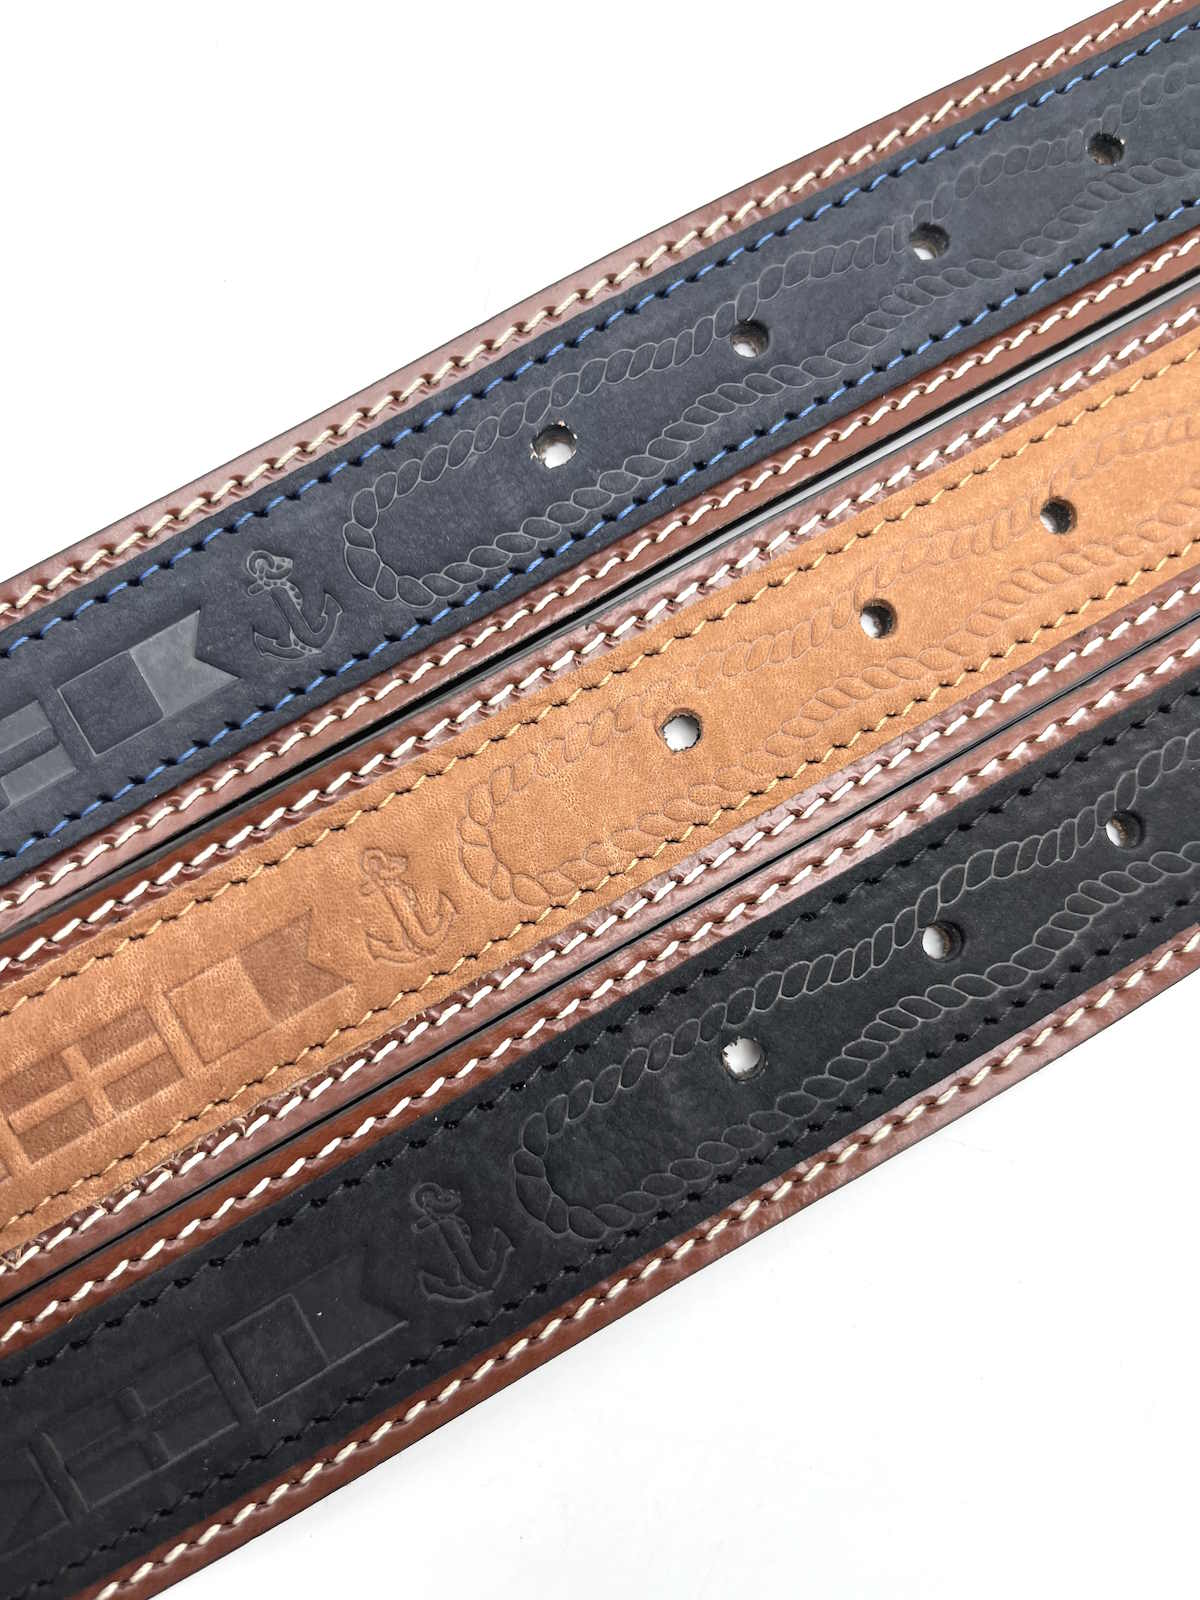 Genuine leather belt, Handmade in Italy, art. HM026/35